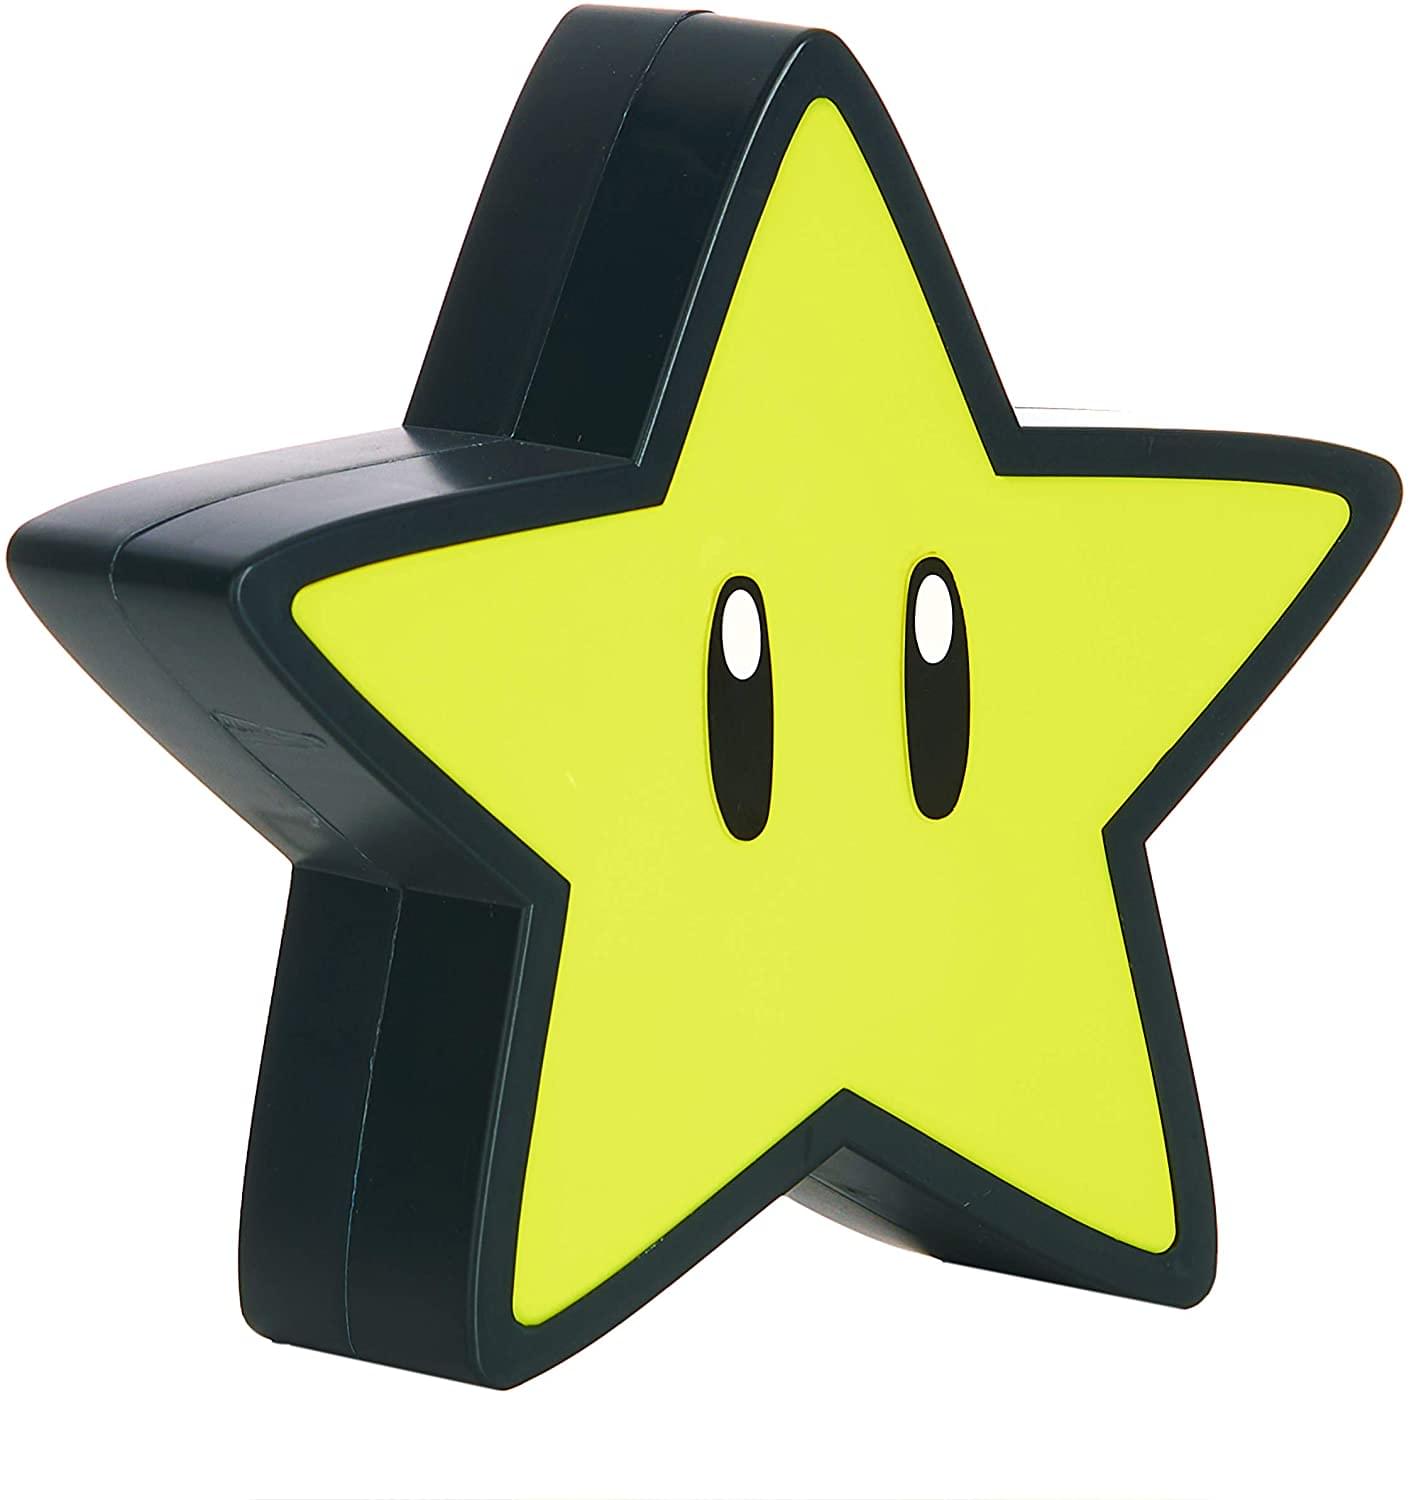 Super Mario Super Star USB Mood Light with Sound